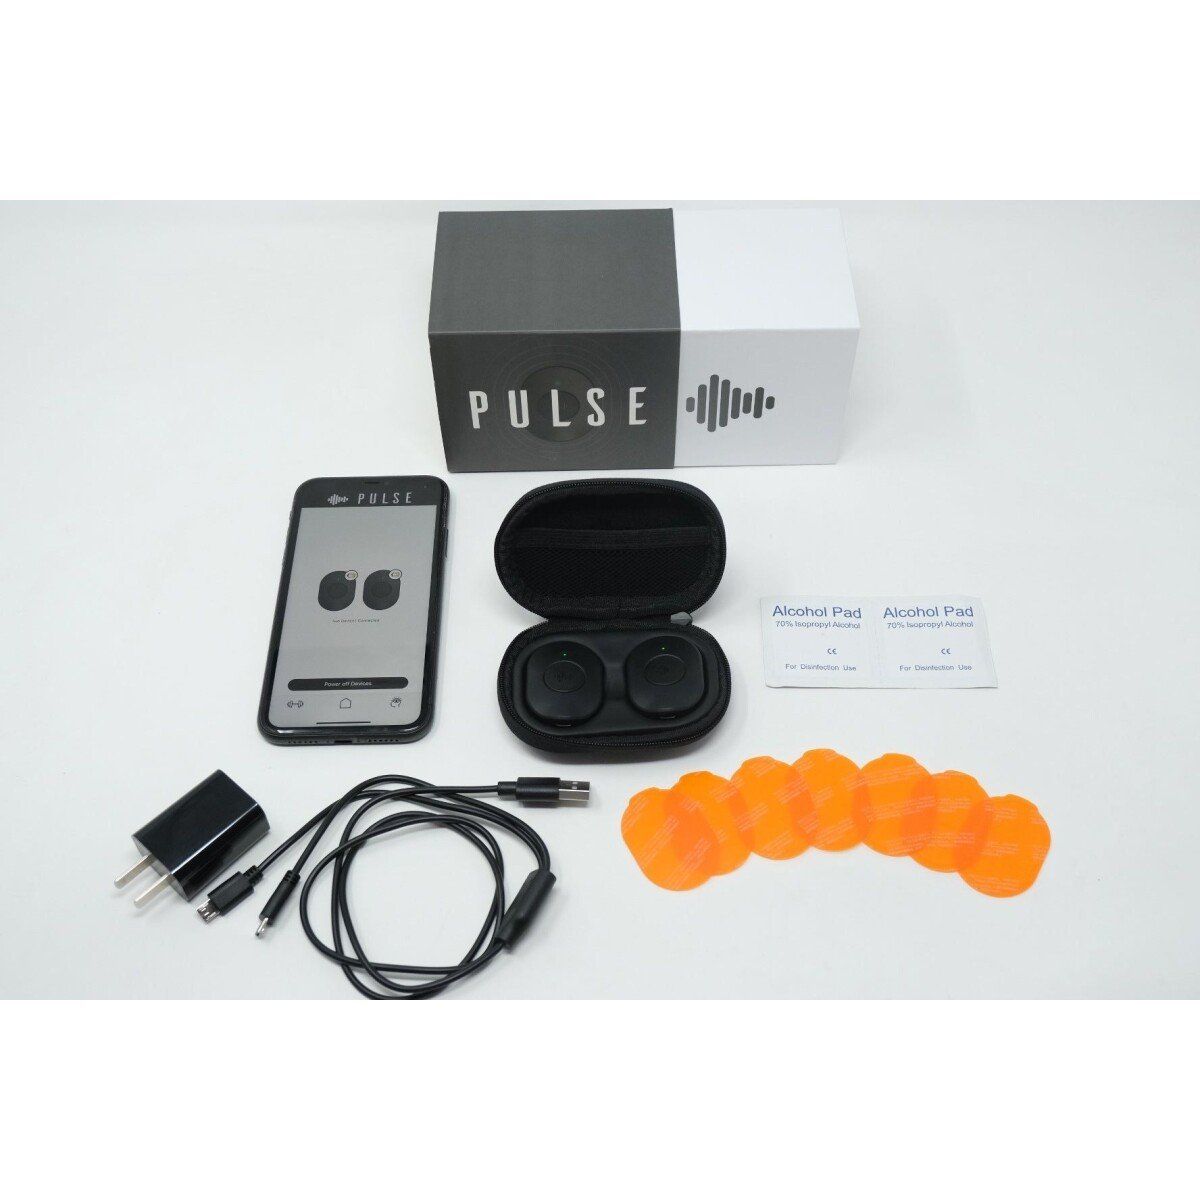 Pulse fitness kit